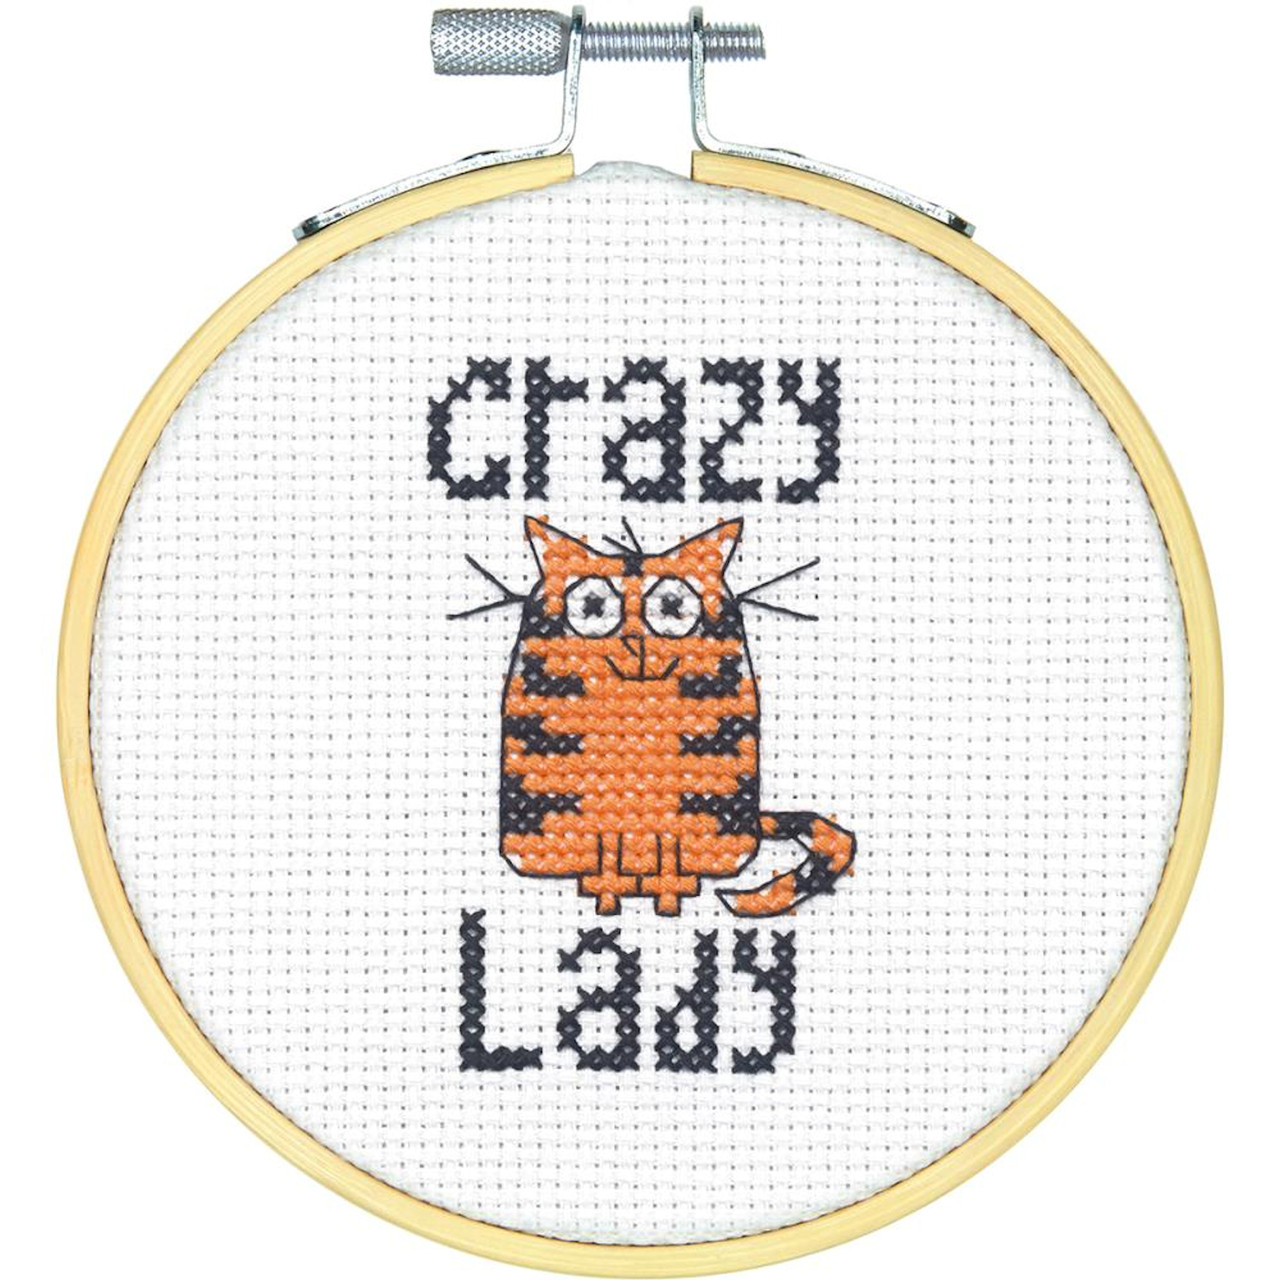 Dimensions 'Stitch Wits' - Crazy Cat Lady